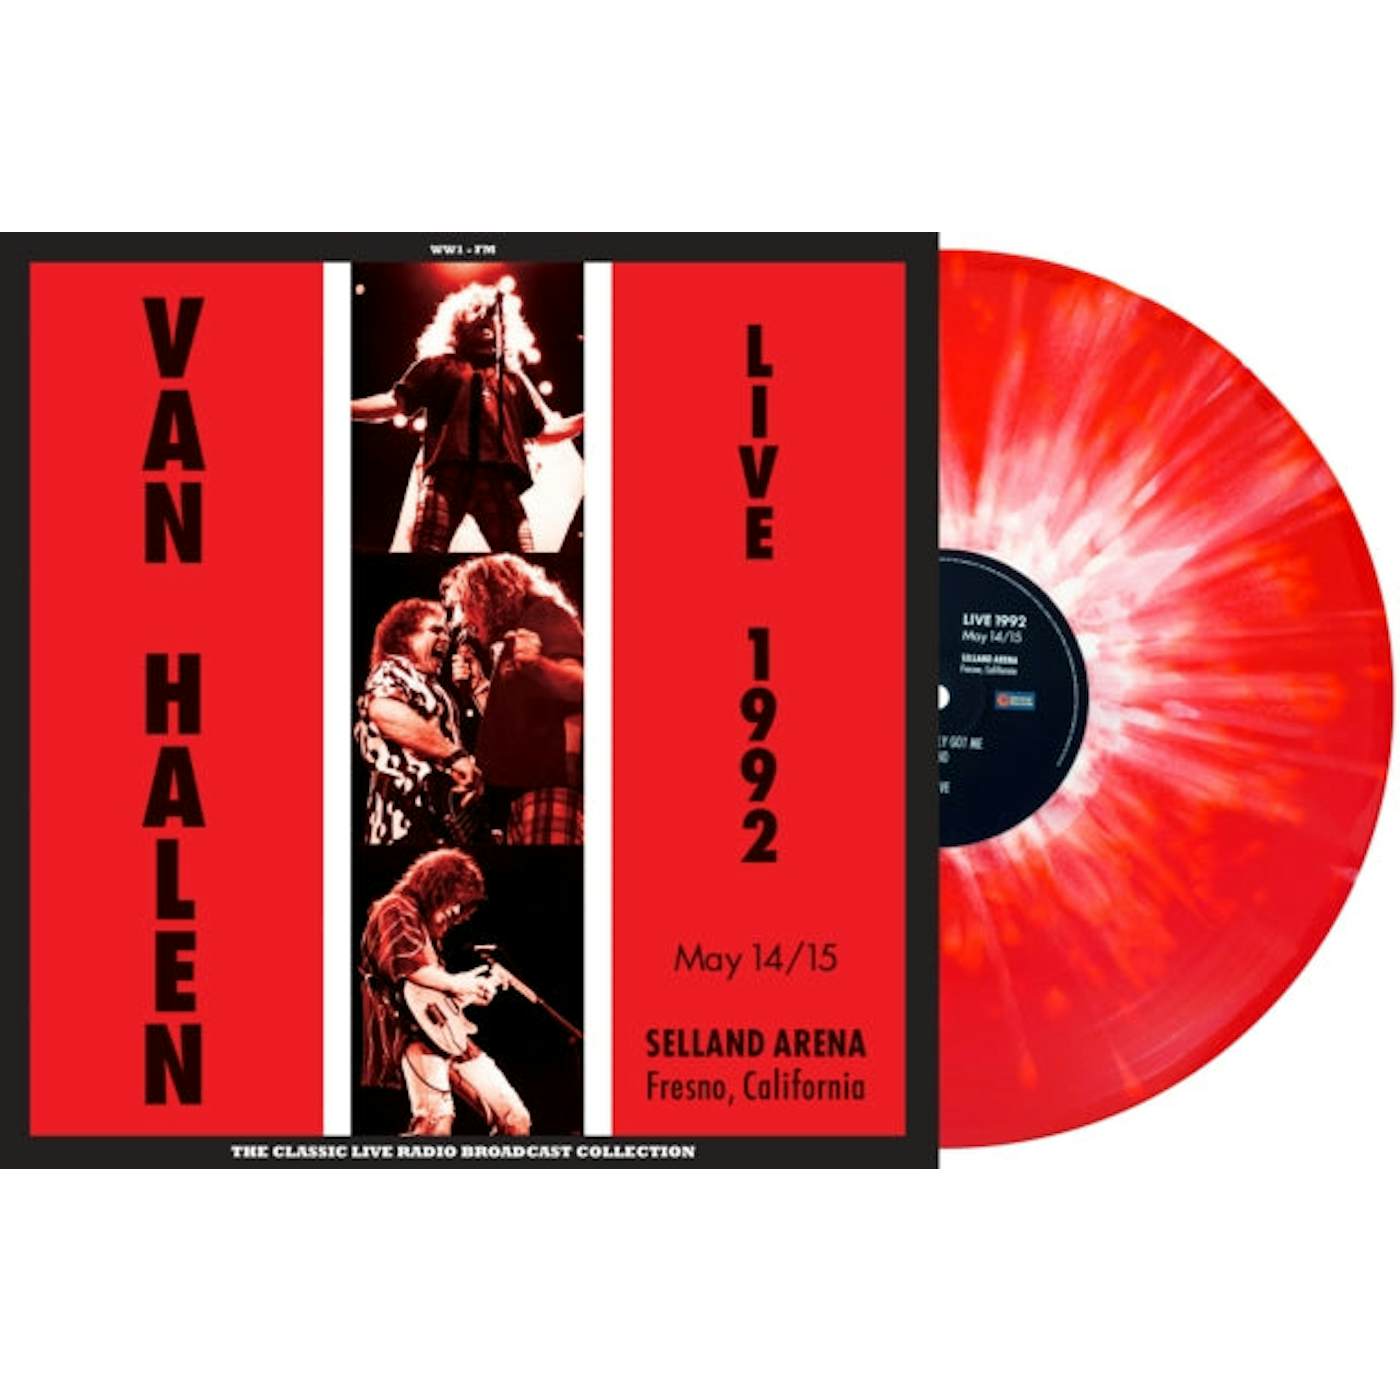 Van Halen LP Vinyl Record - Live At Selland Arena Fresno 19 92 (Red/White Splatter Vinyl)